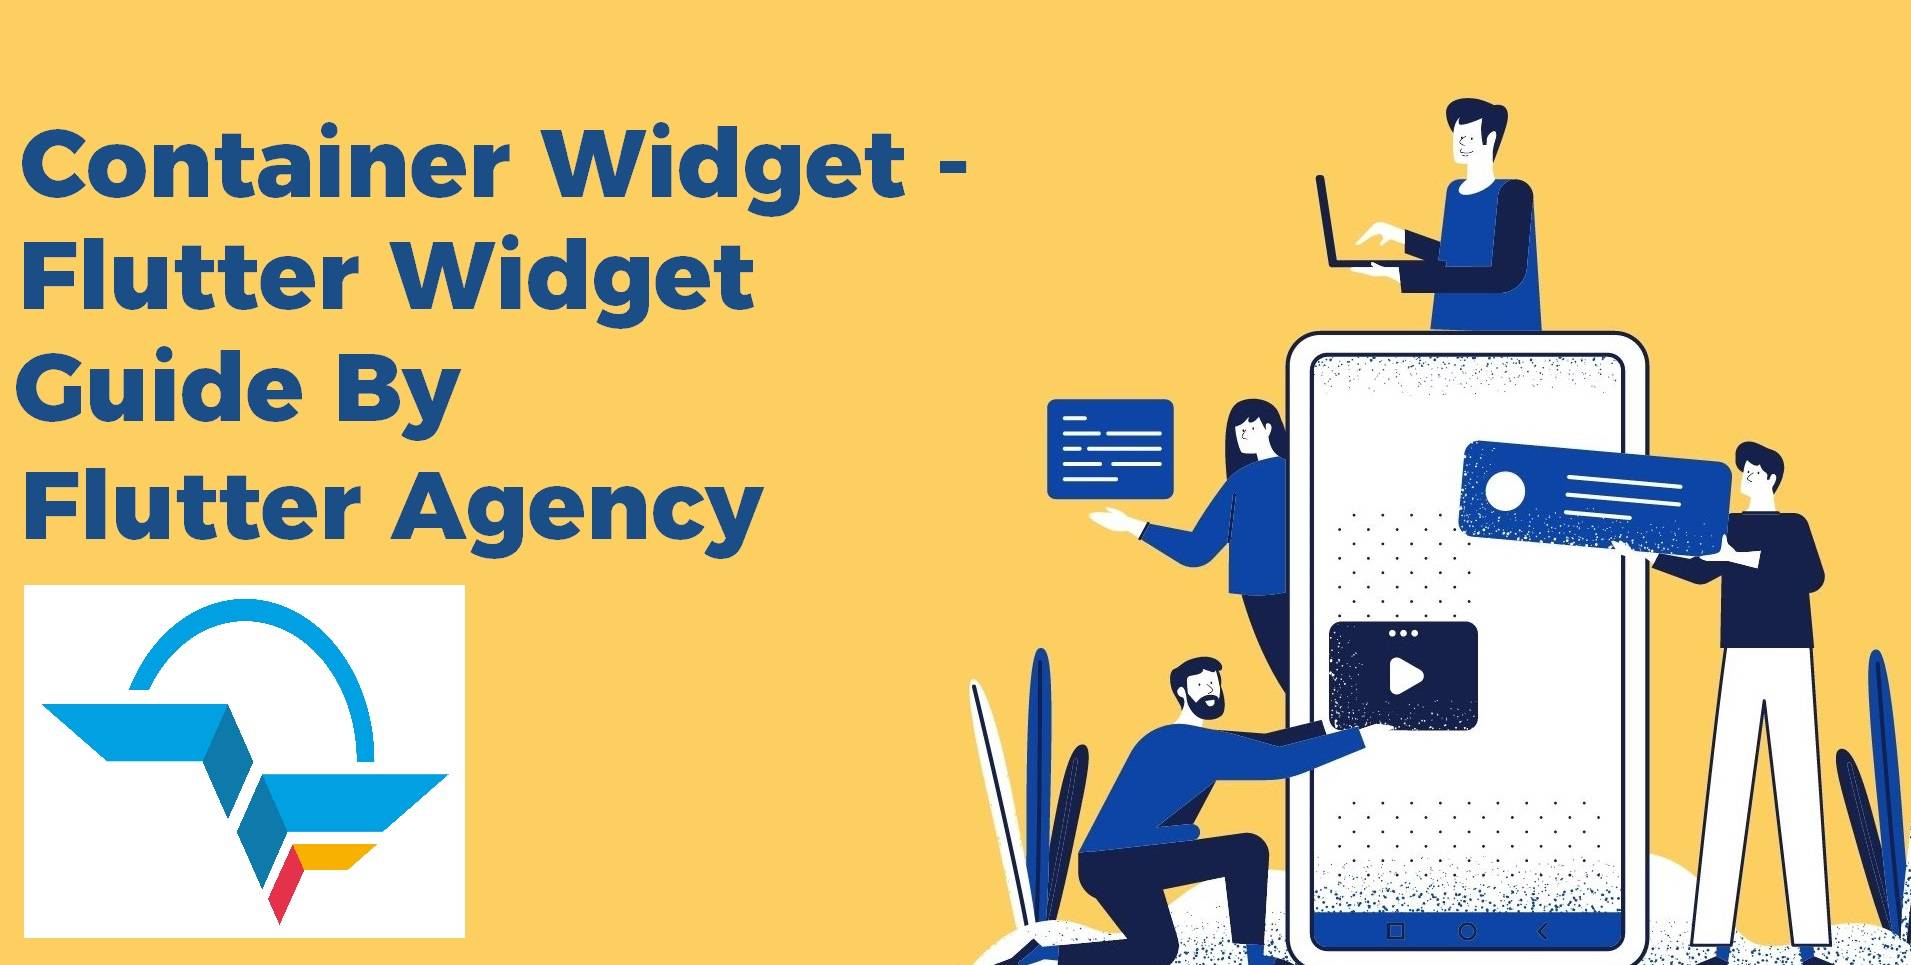 Container Widget - Flutter Widget Guide By Flutter Agency